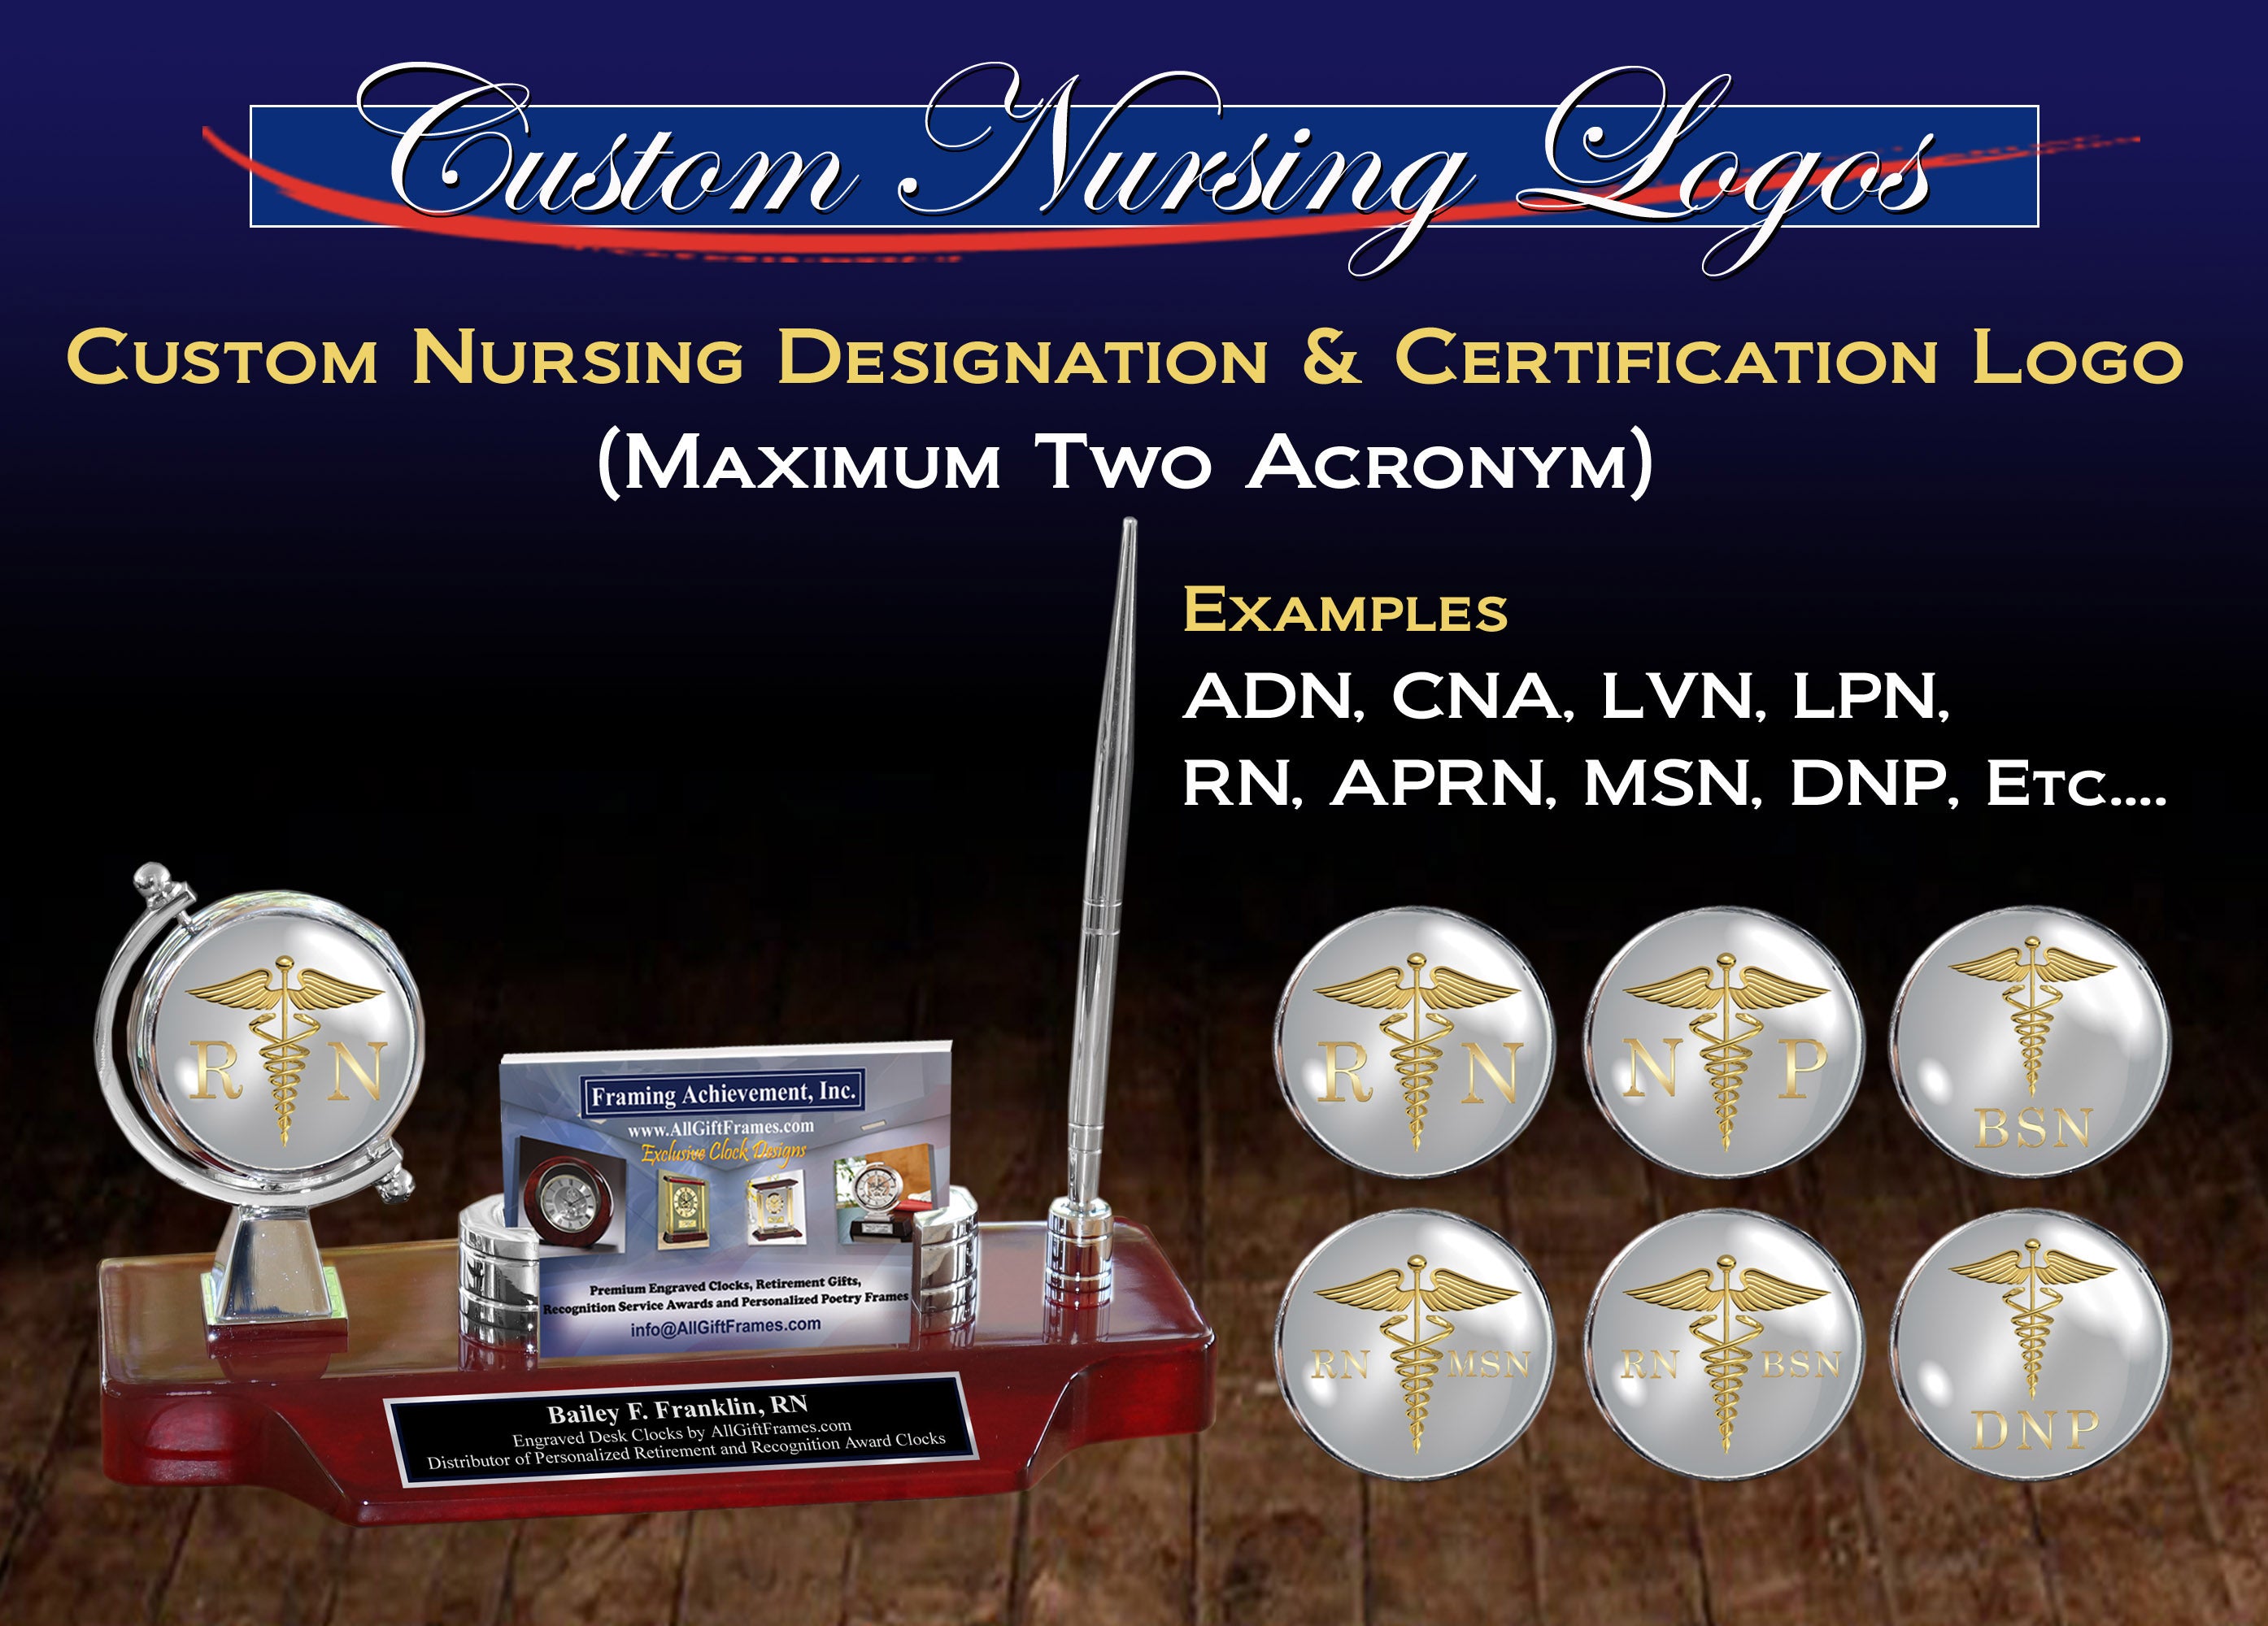 LVN Badge Reel - LVN Badge Holder - Nurse Gift - Nurse Graduation Gift - LVN Gift - Nurses Week Gift